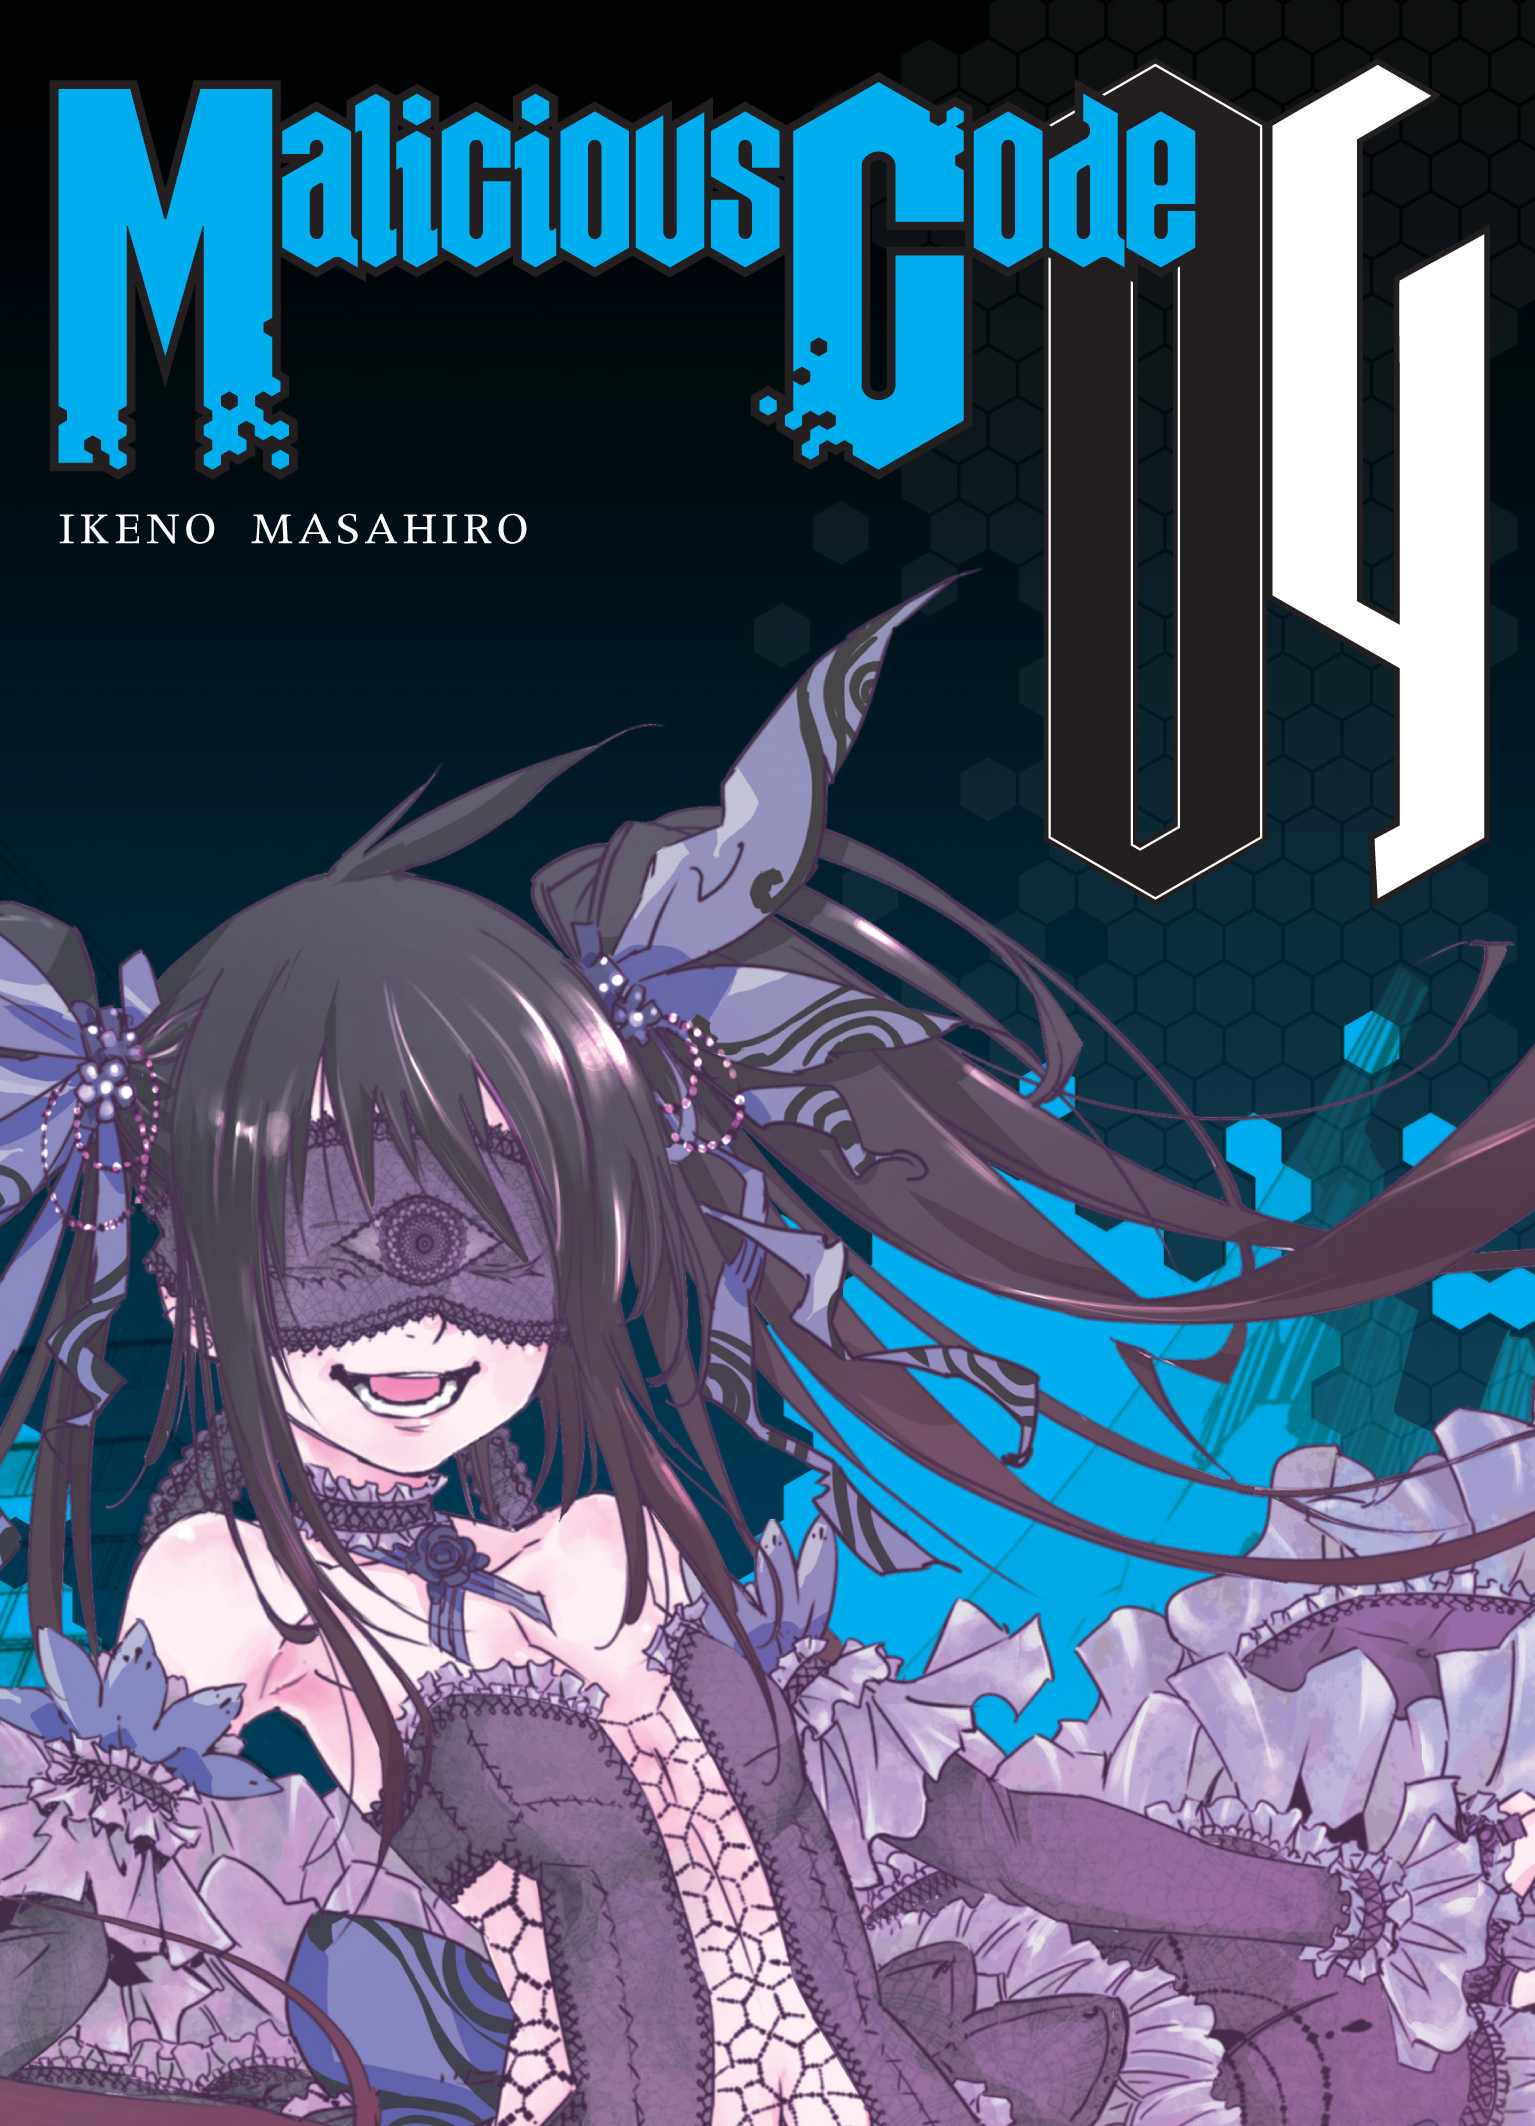 malicious-code-manga-volume-4-simple-77142.jpg